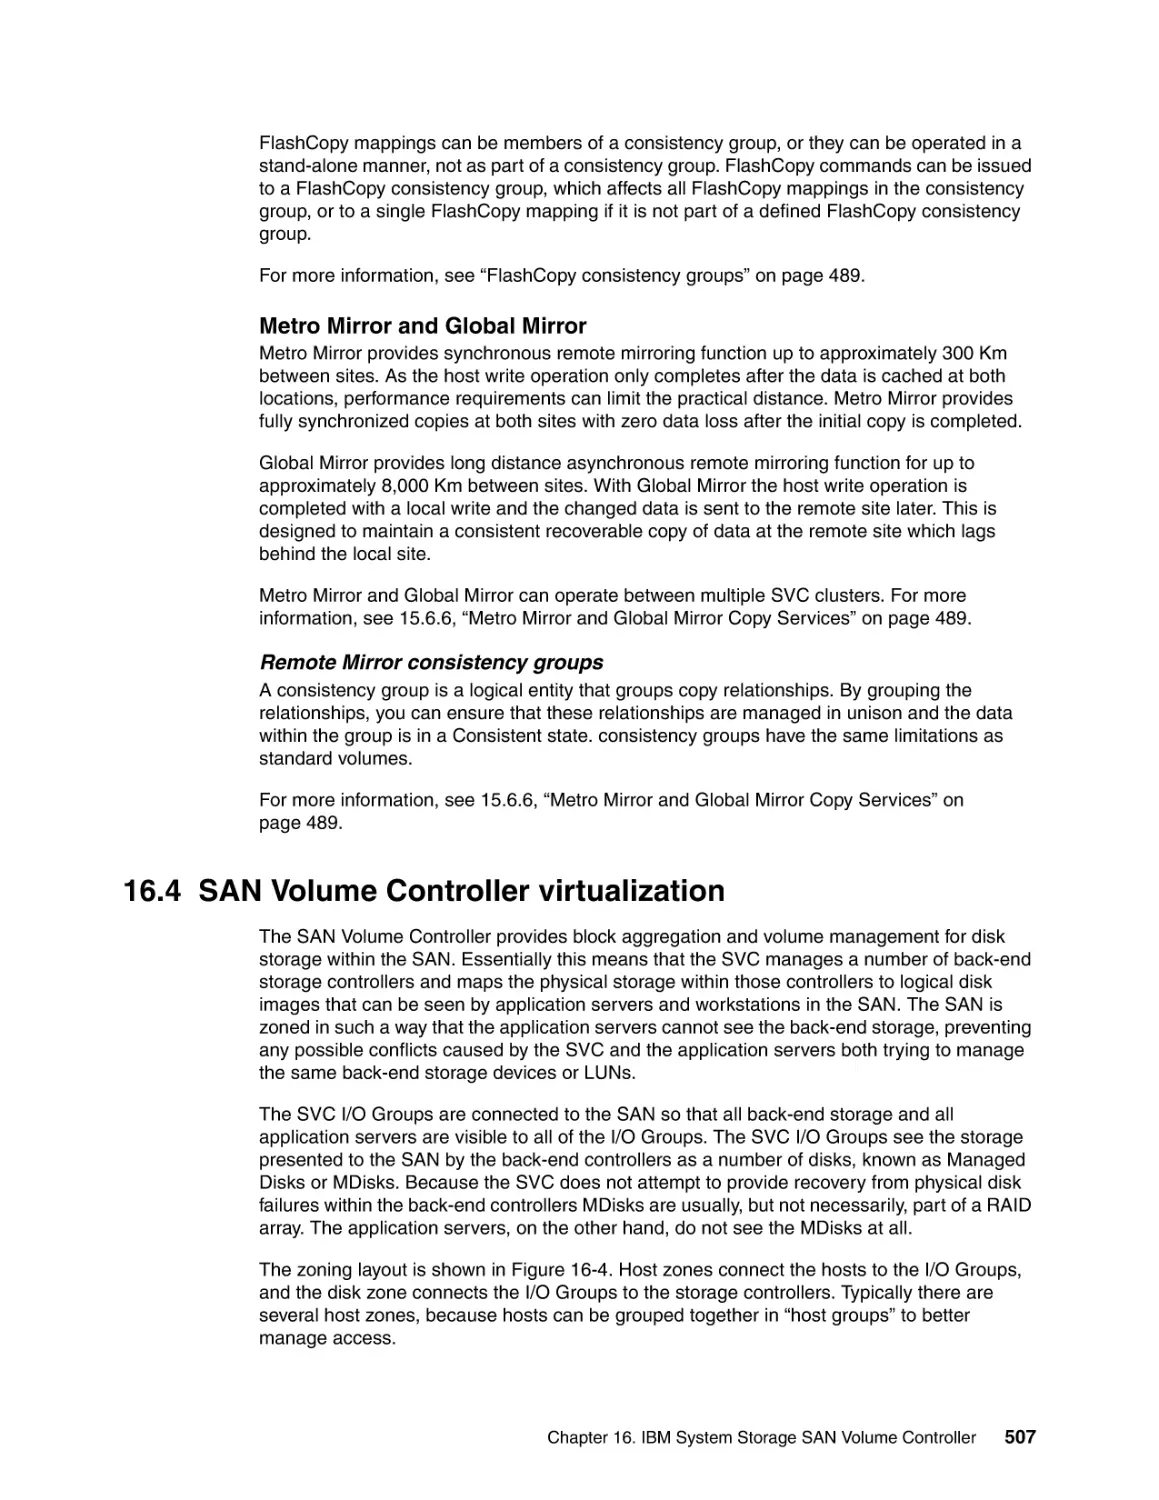 16.4 SAN Volume Controller virtualization